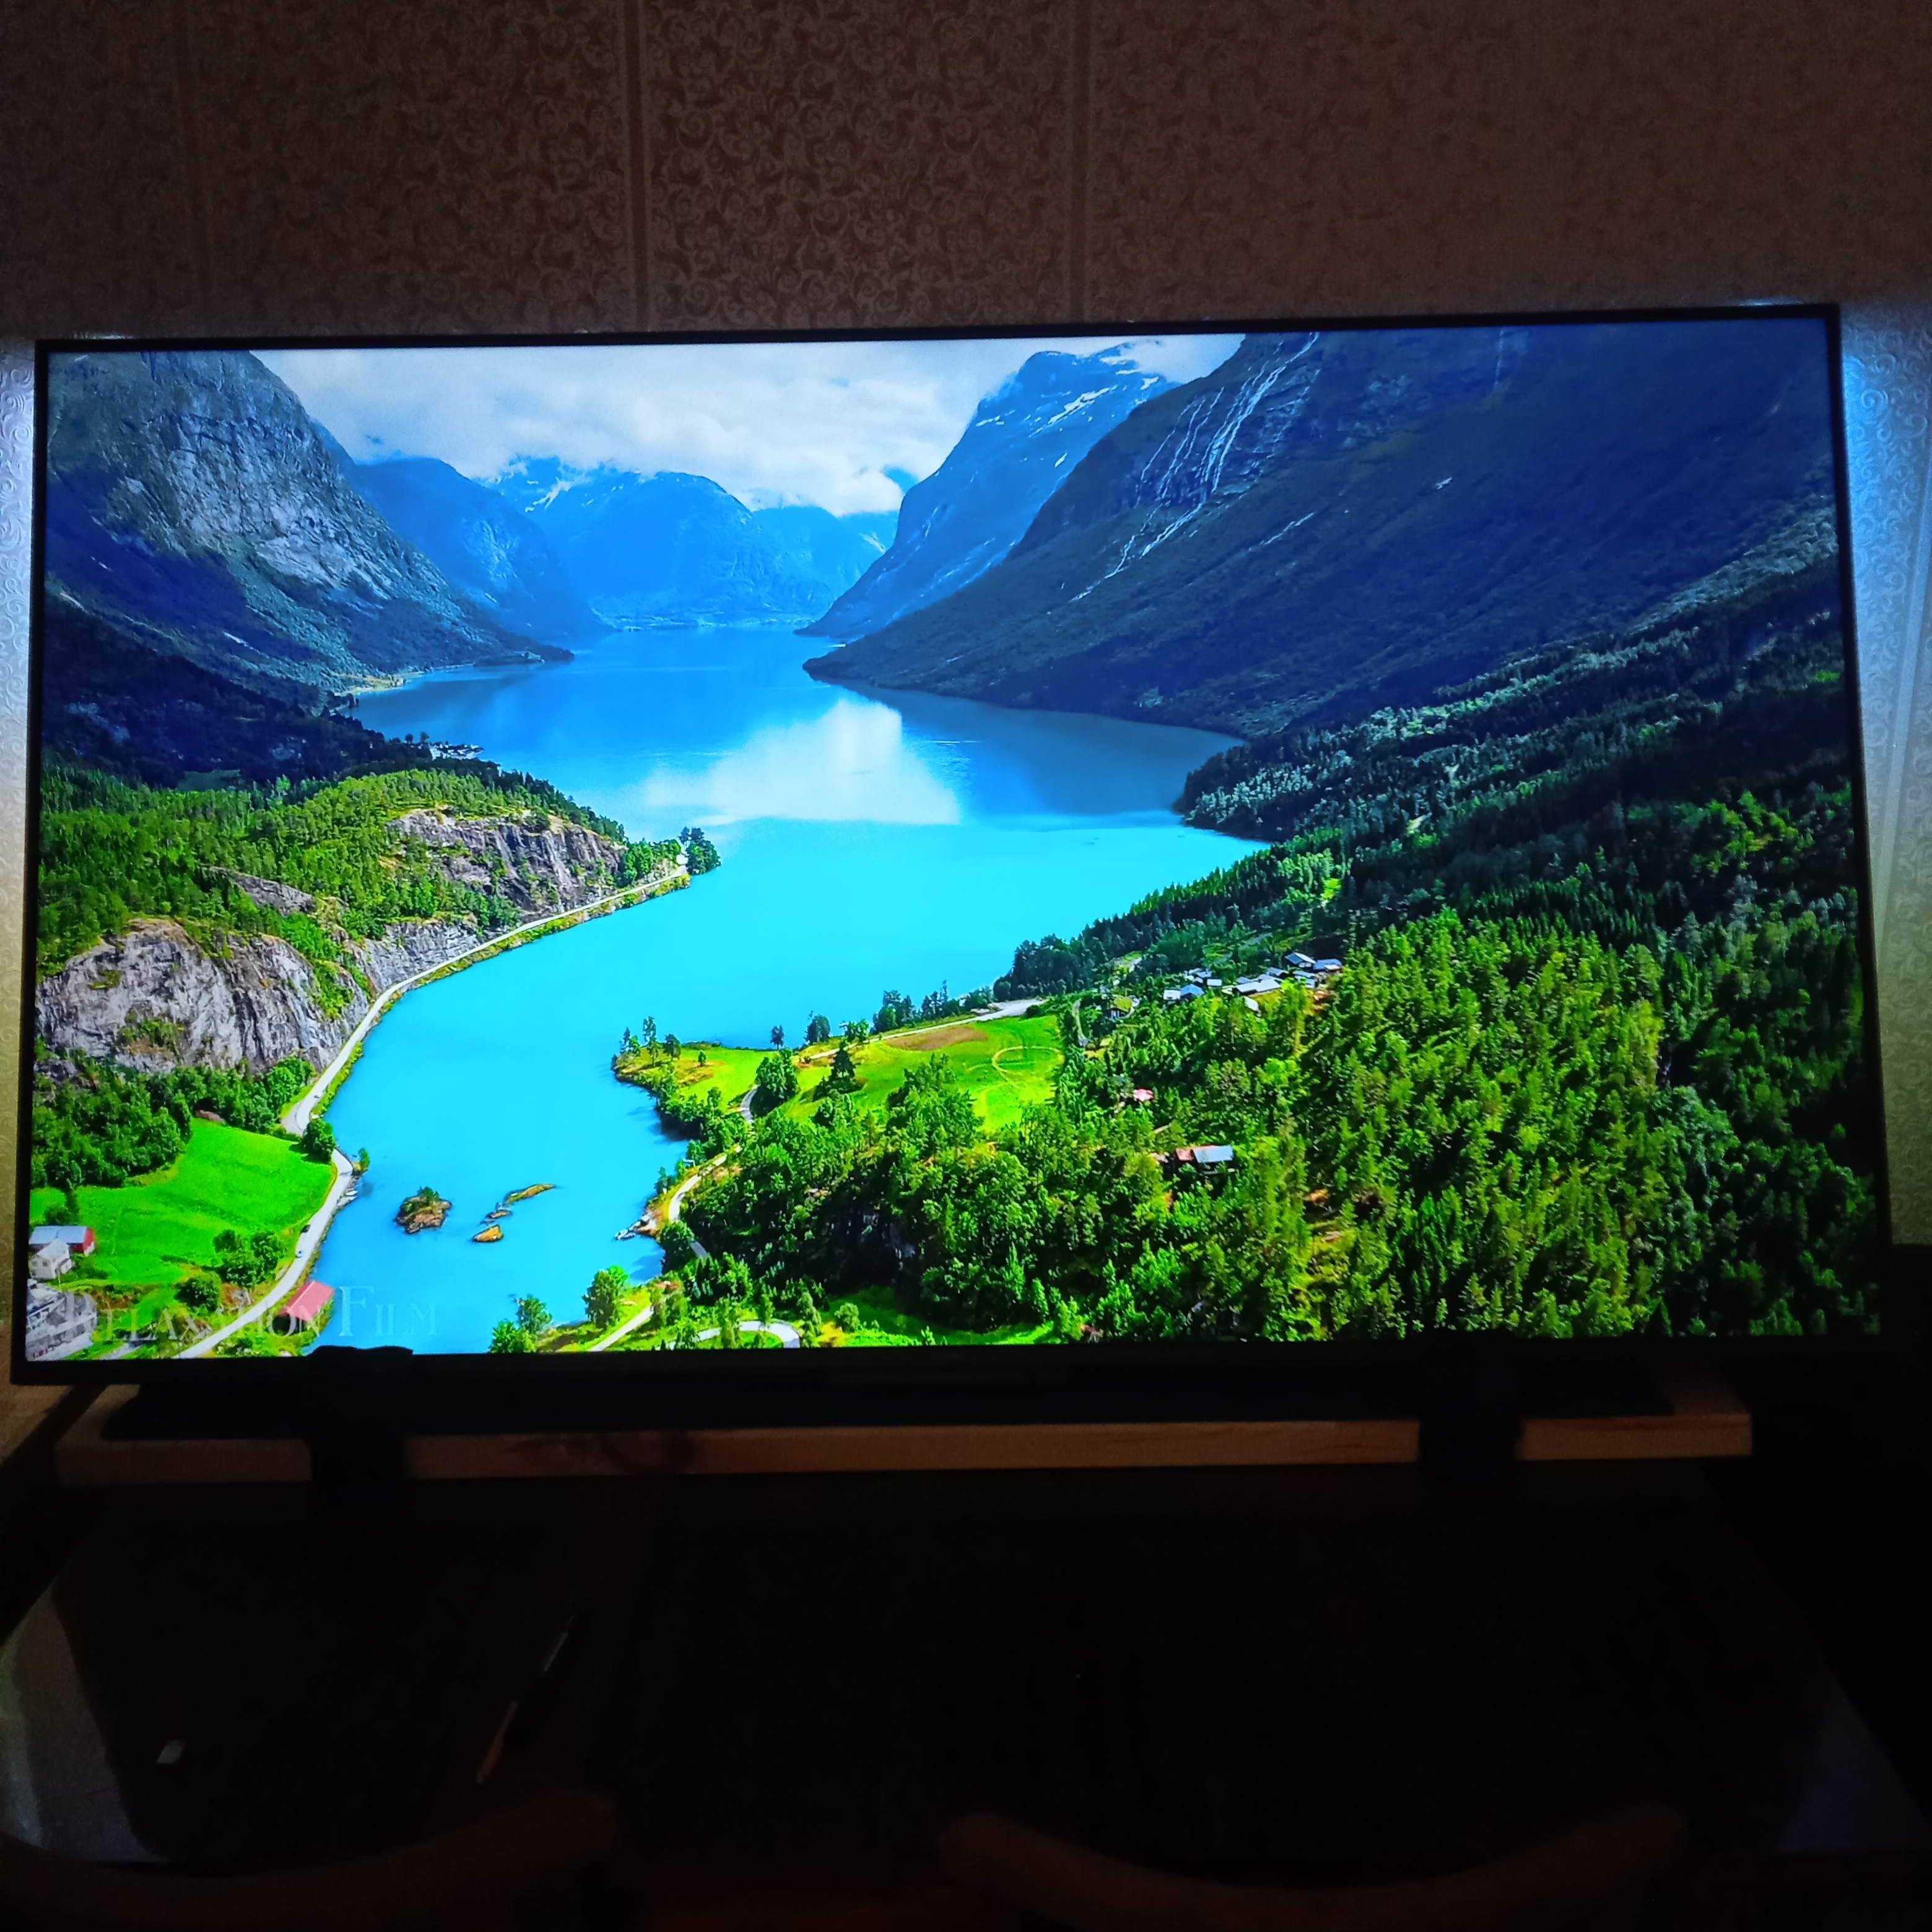 Телевізор Philips 65PUS8108/12 4K Ultra HD Smart Ambilight 2023р.